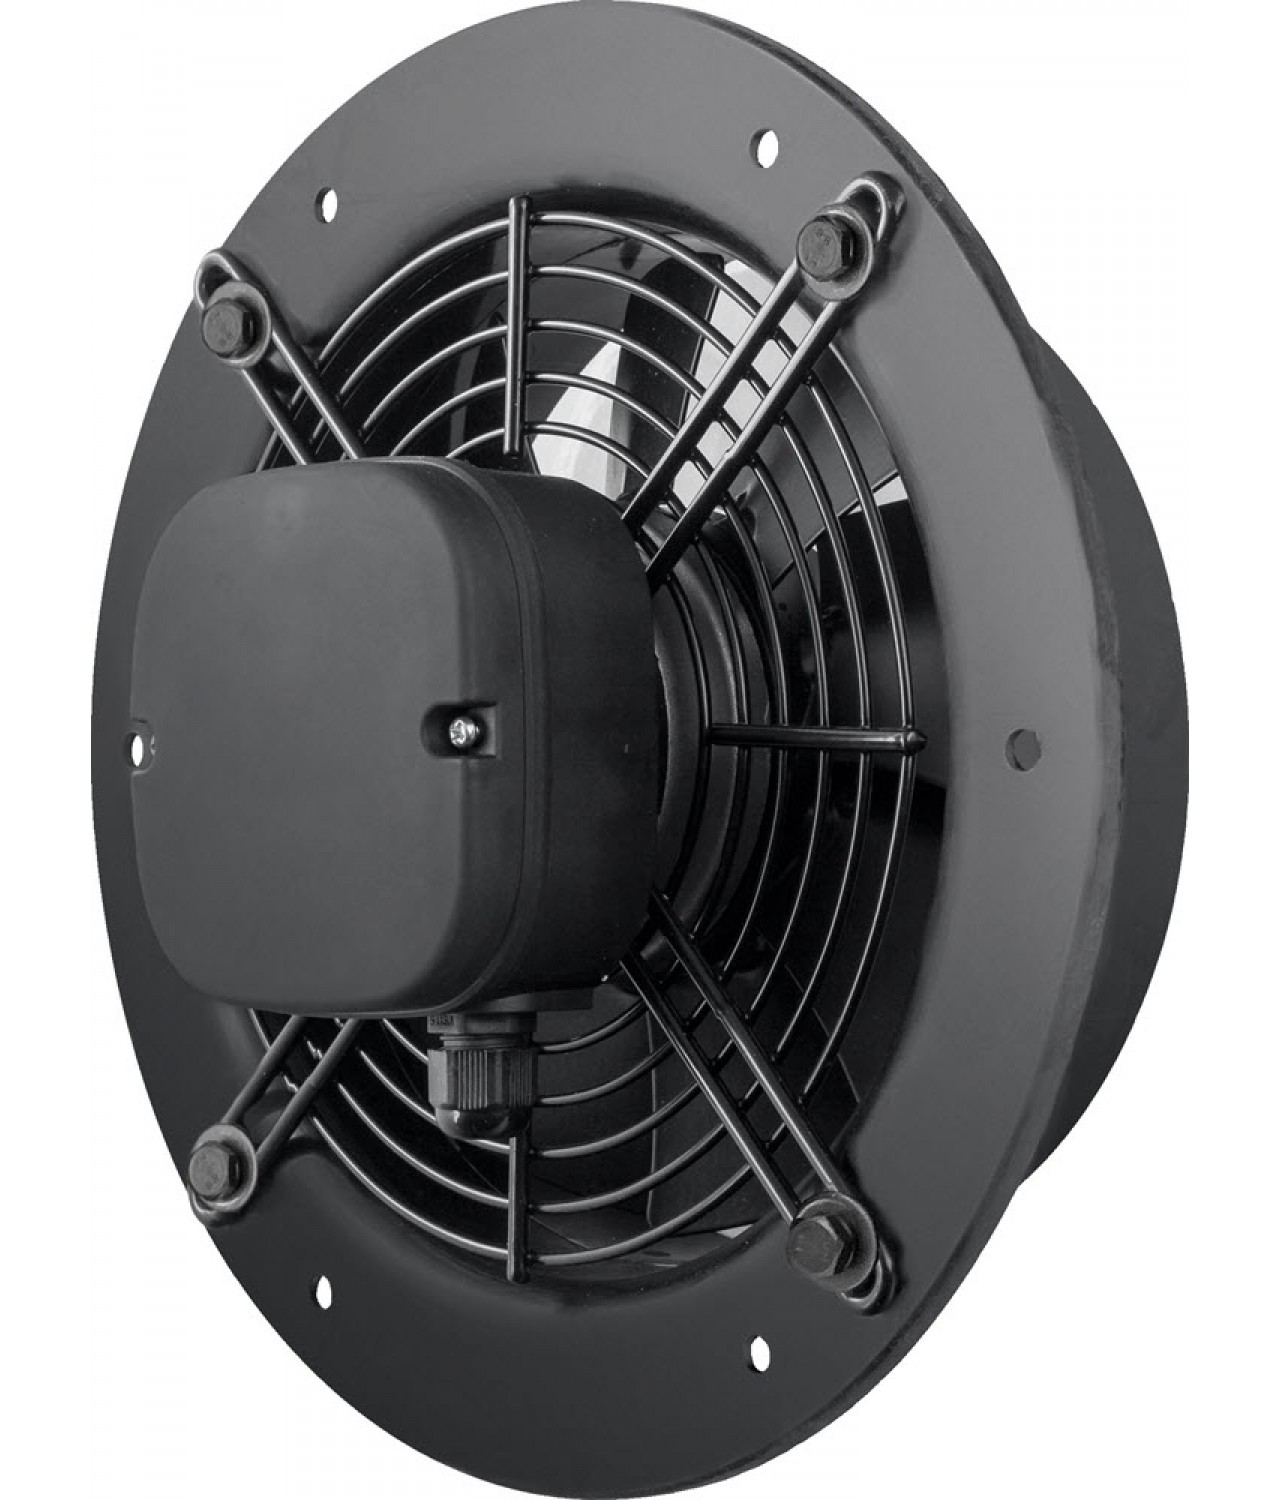 Ašiniai ventiliatoriai Axia ROS ≤20695 m³/h